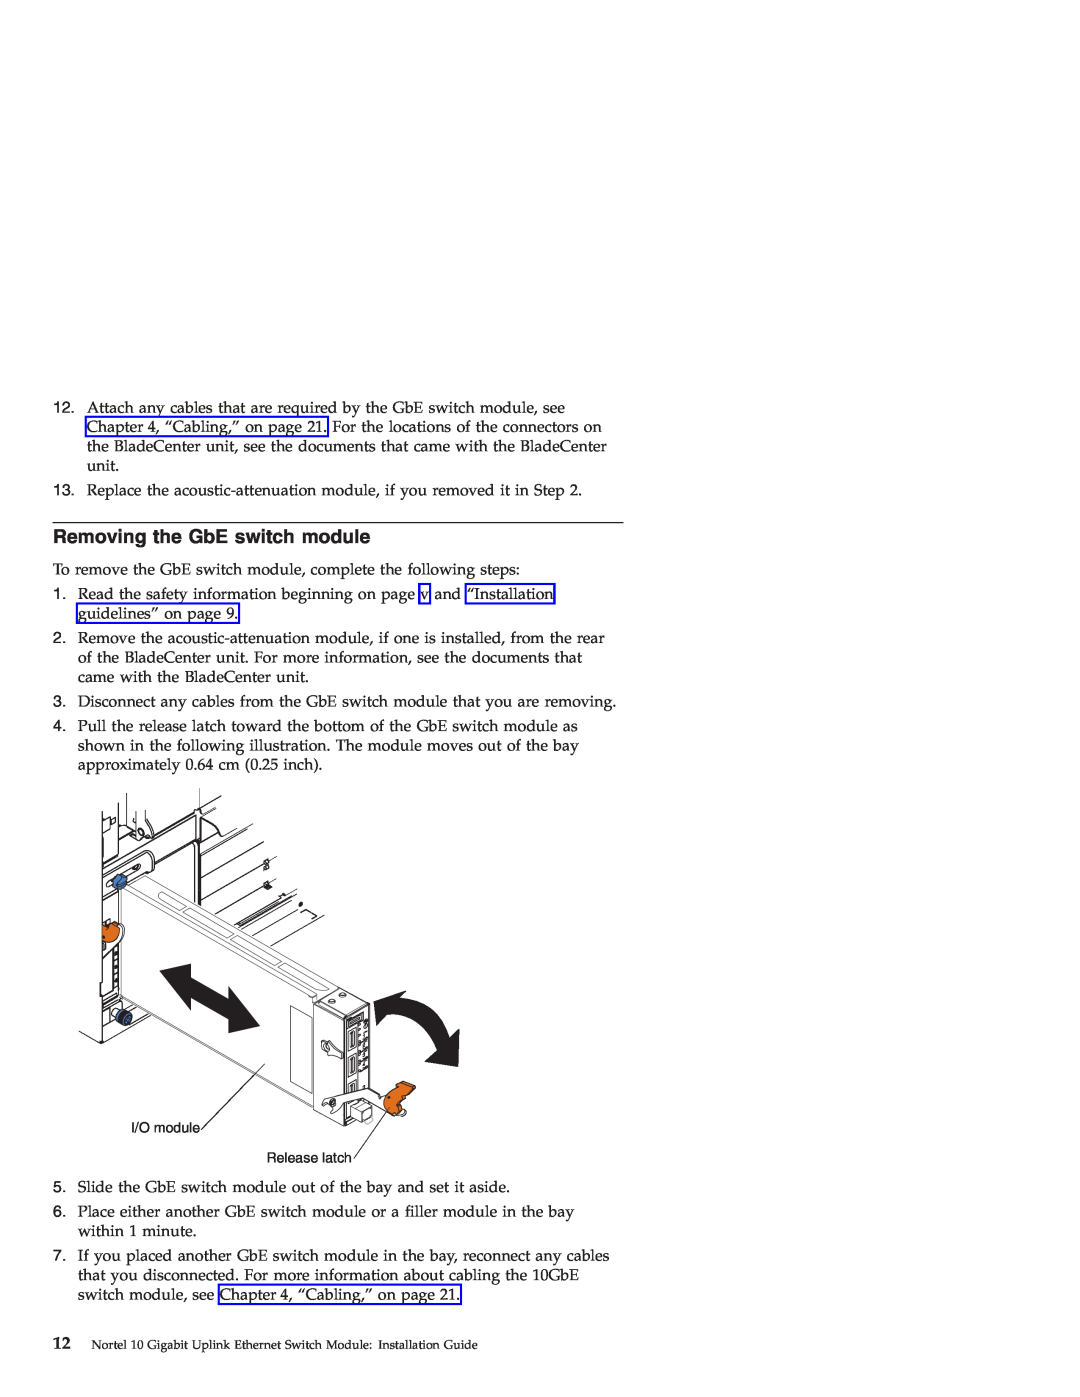 IBM manual Removing the GbE switch module, Nortel 10 Gigabit Uplink Ethernet Switch Module Installation Guide 